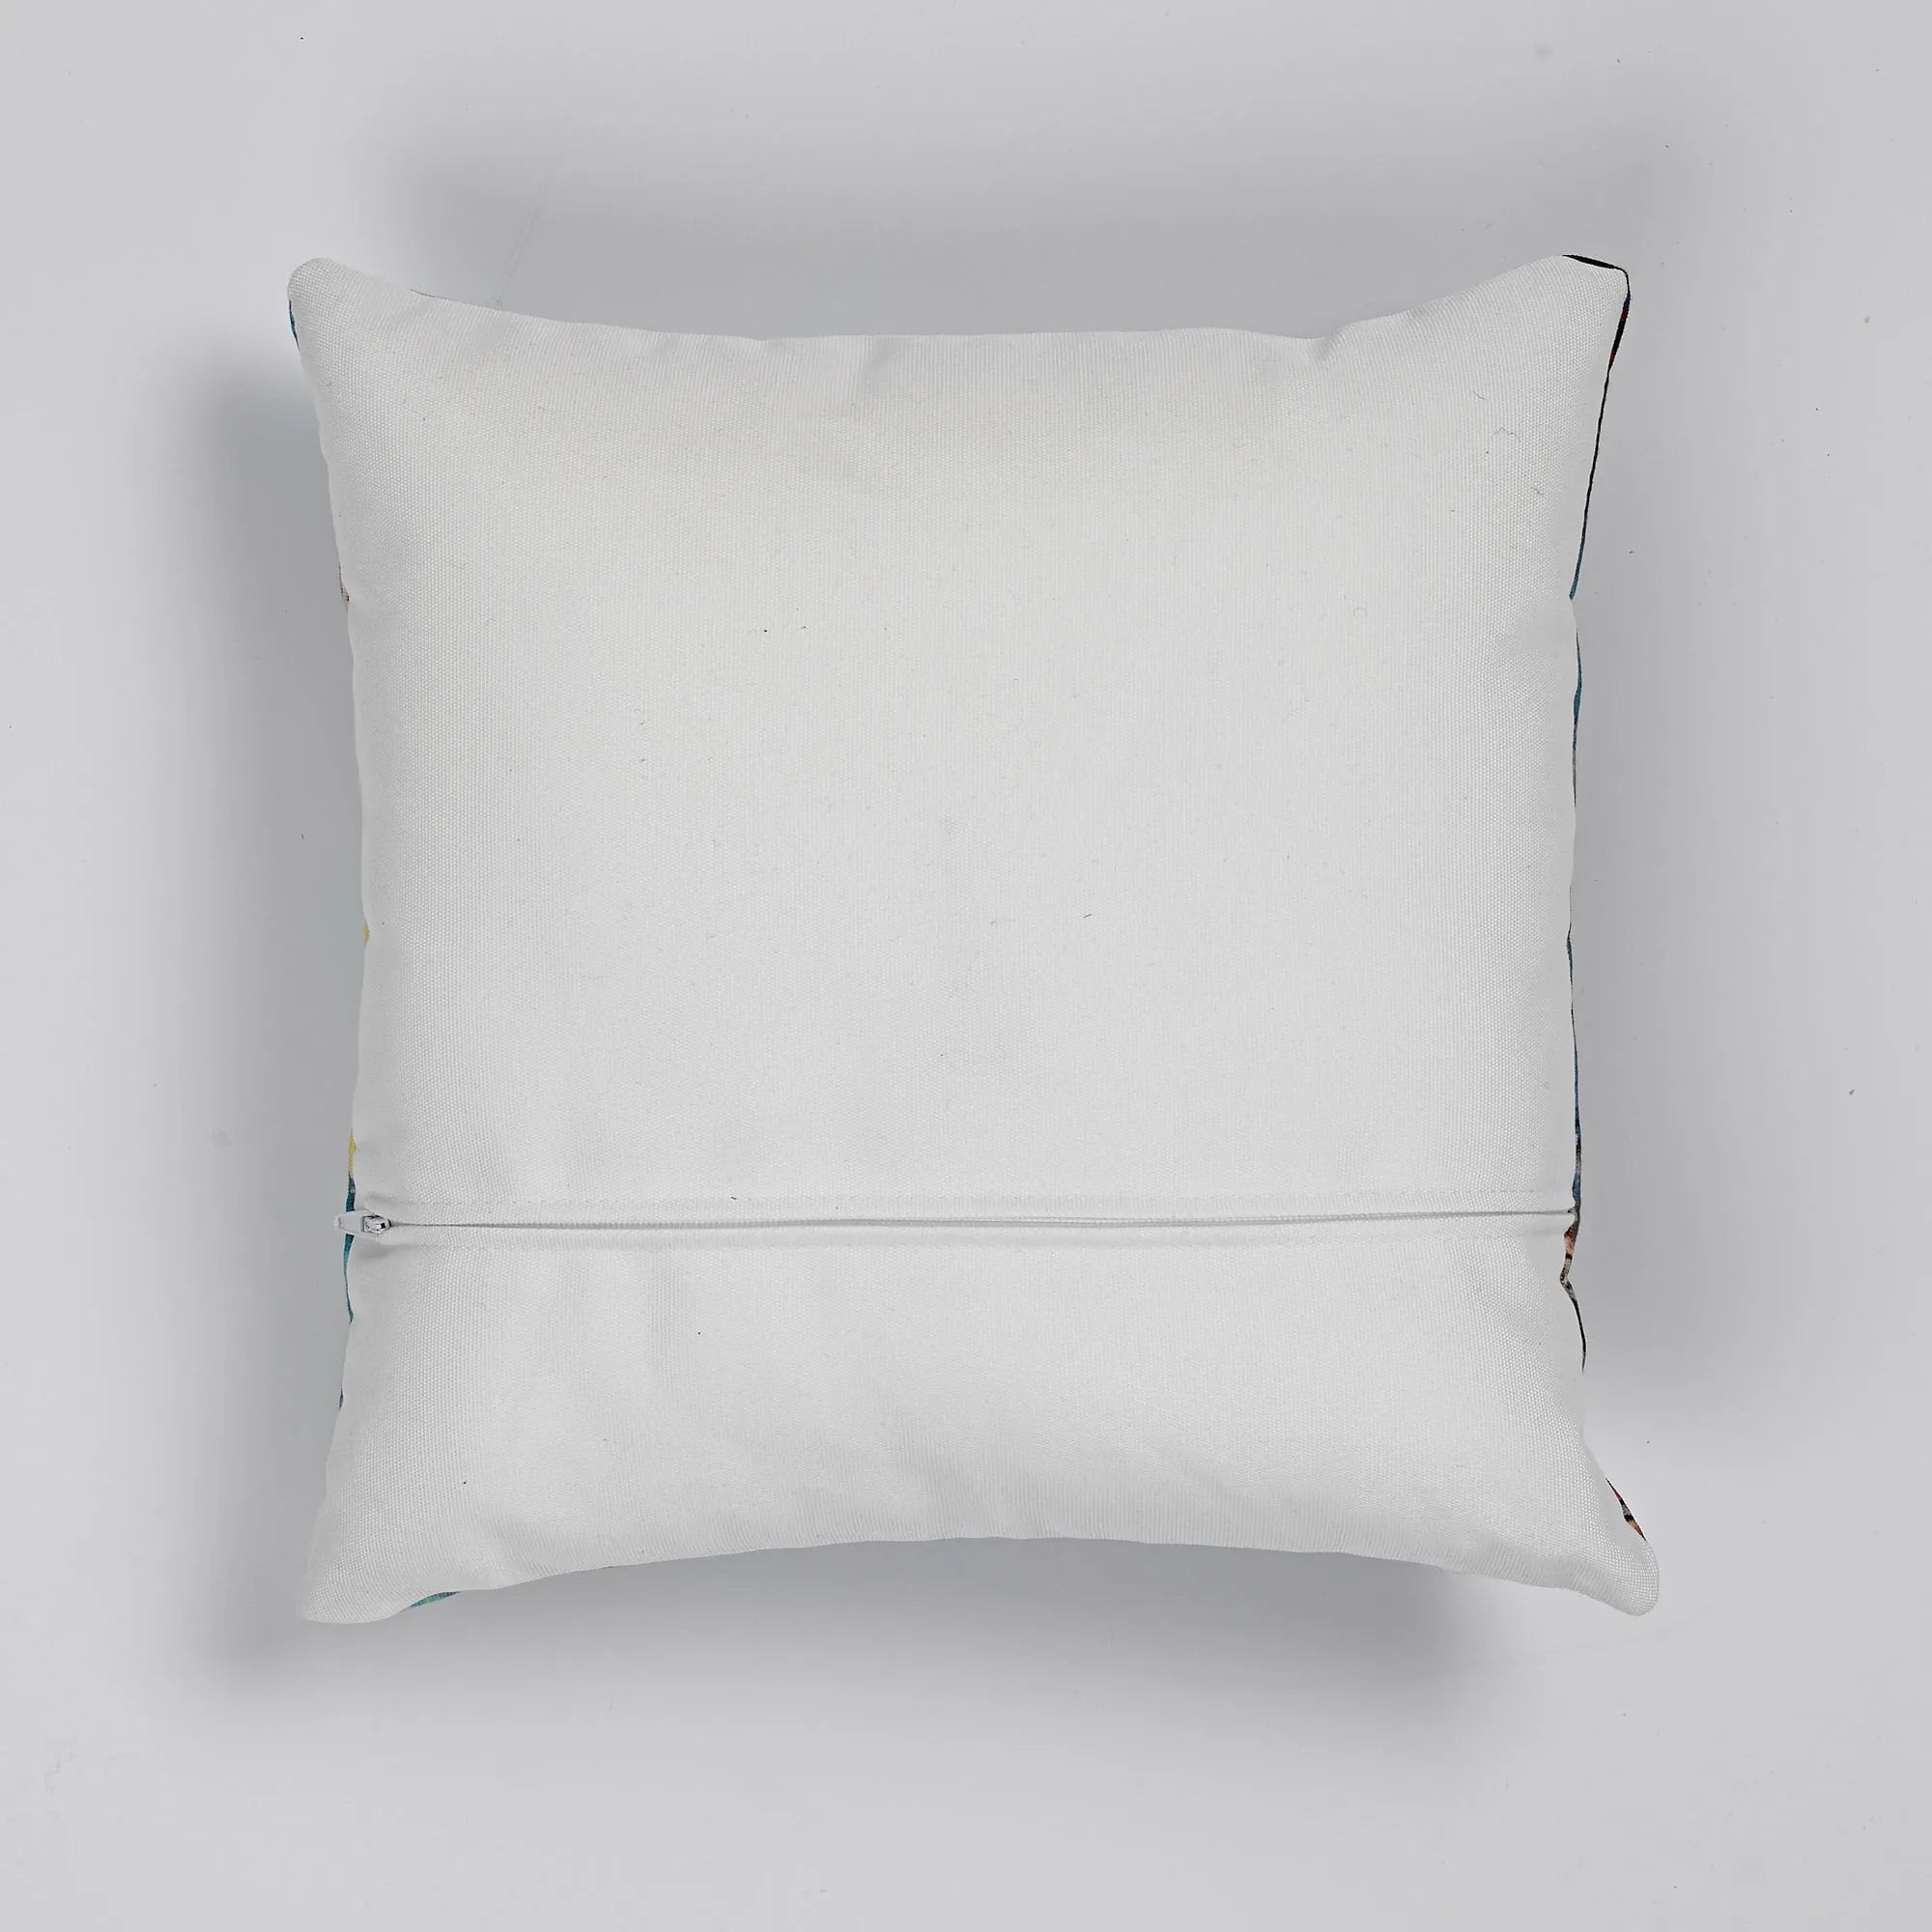 Flying High 7 Cushion - Decorative Throw Pillow - Throw Pillows - Aesthetic Art